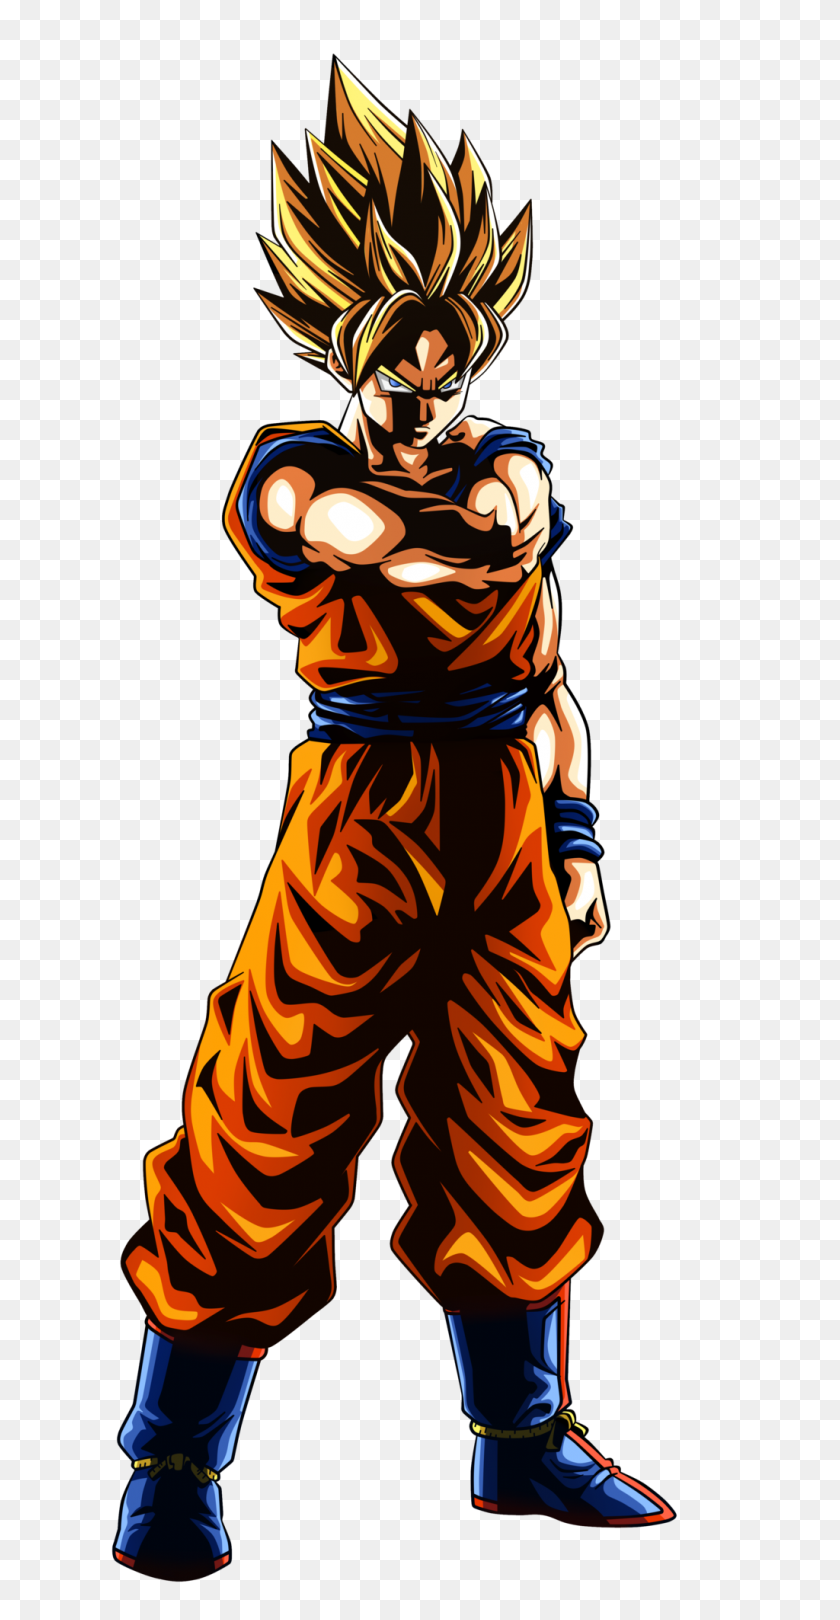 1024x2048 The Transcended Warrior Legendary Rare Super Saiyan Goku! - Goku Super Saiyan PNG